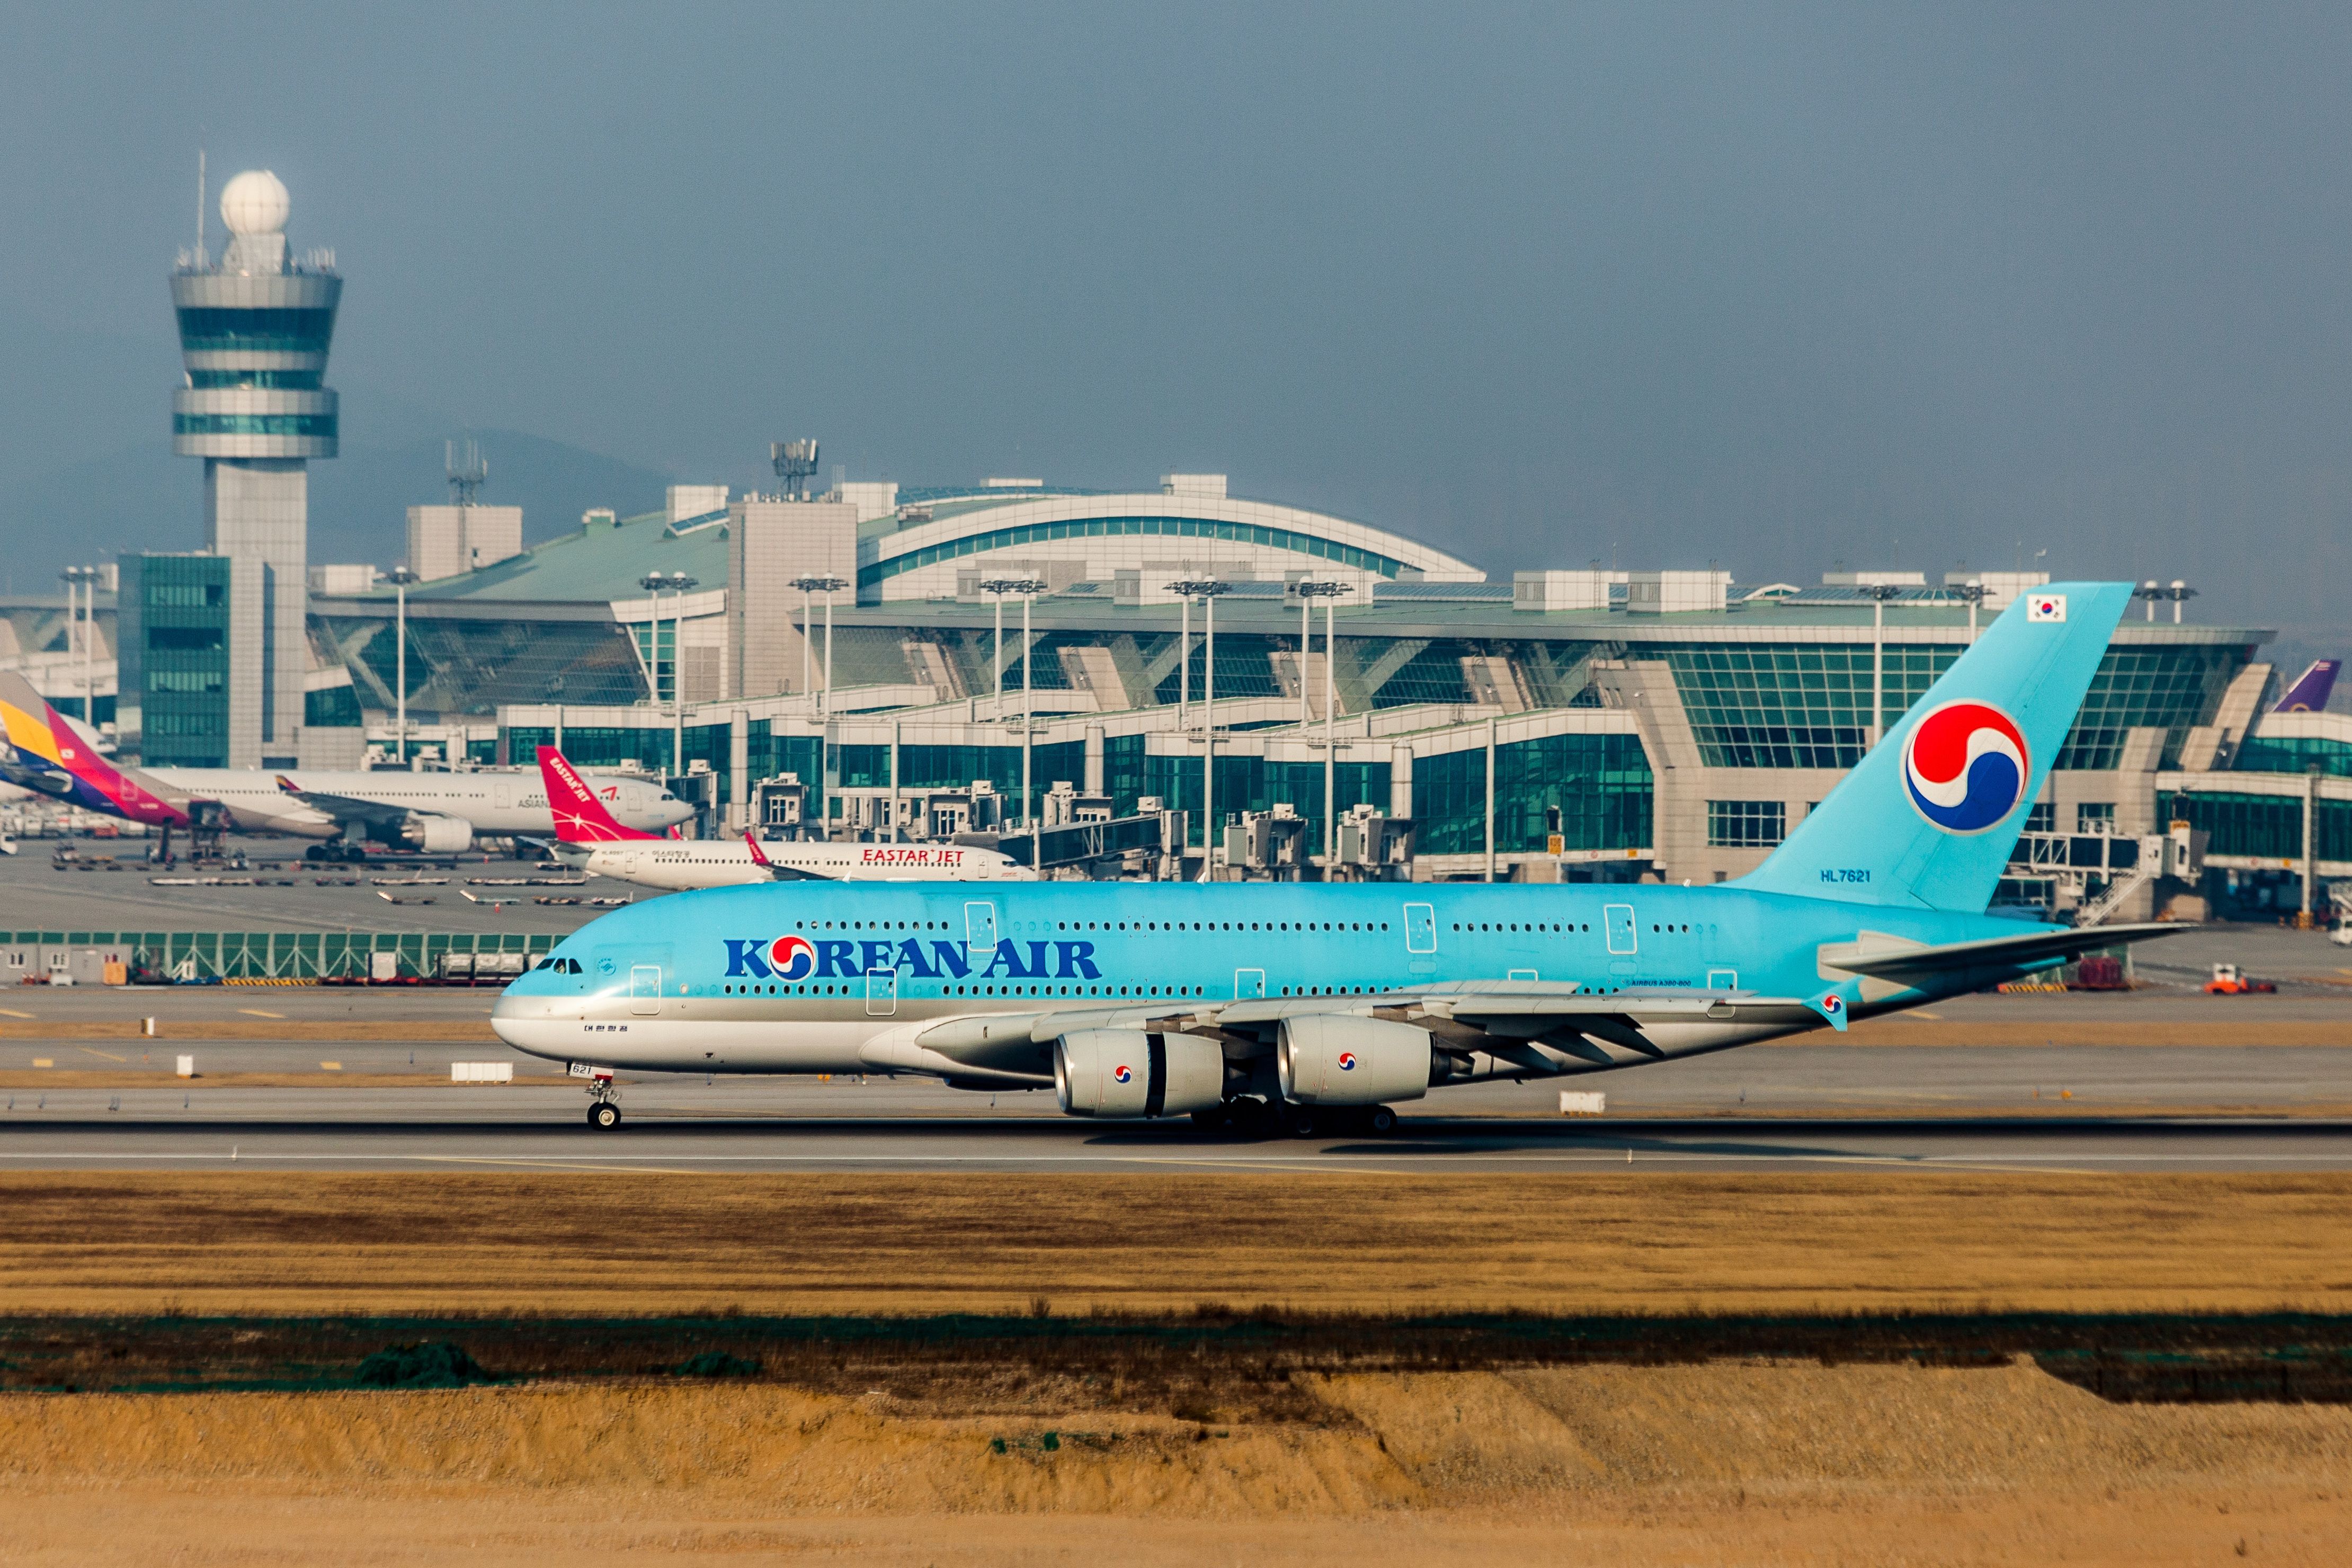 A Korean Air Airbus A380 On The Airport Apron At Incheon International Airport.